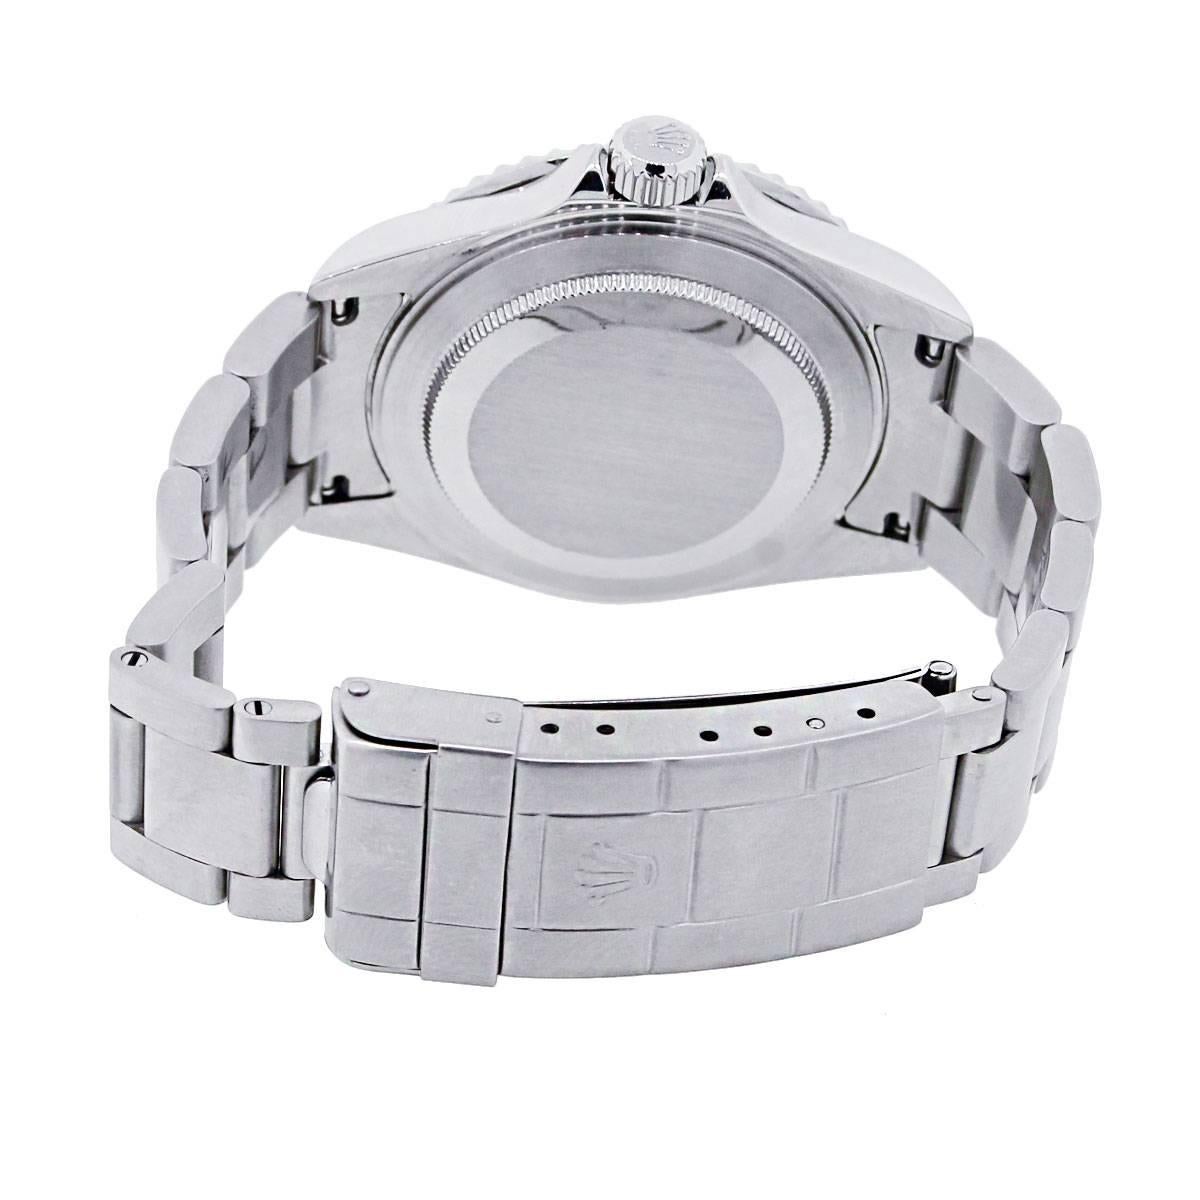 Men's Rolex Stainless steel Submariner Automatic Wristwatch Ref 16610 